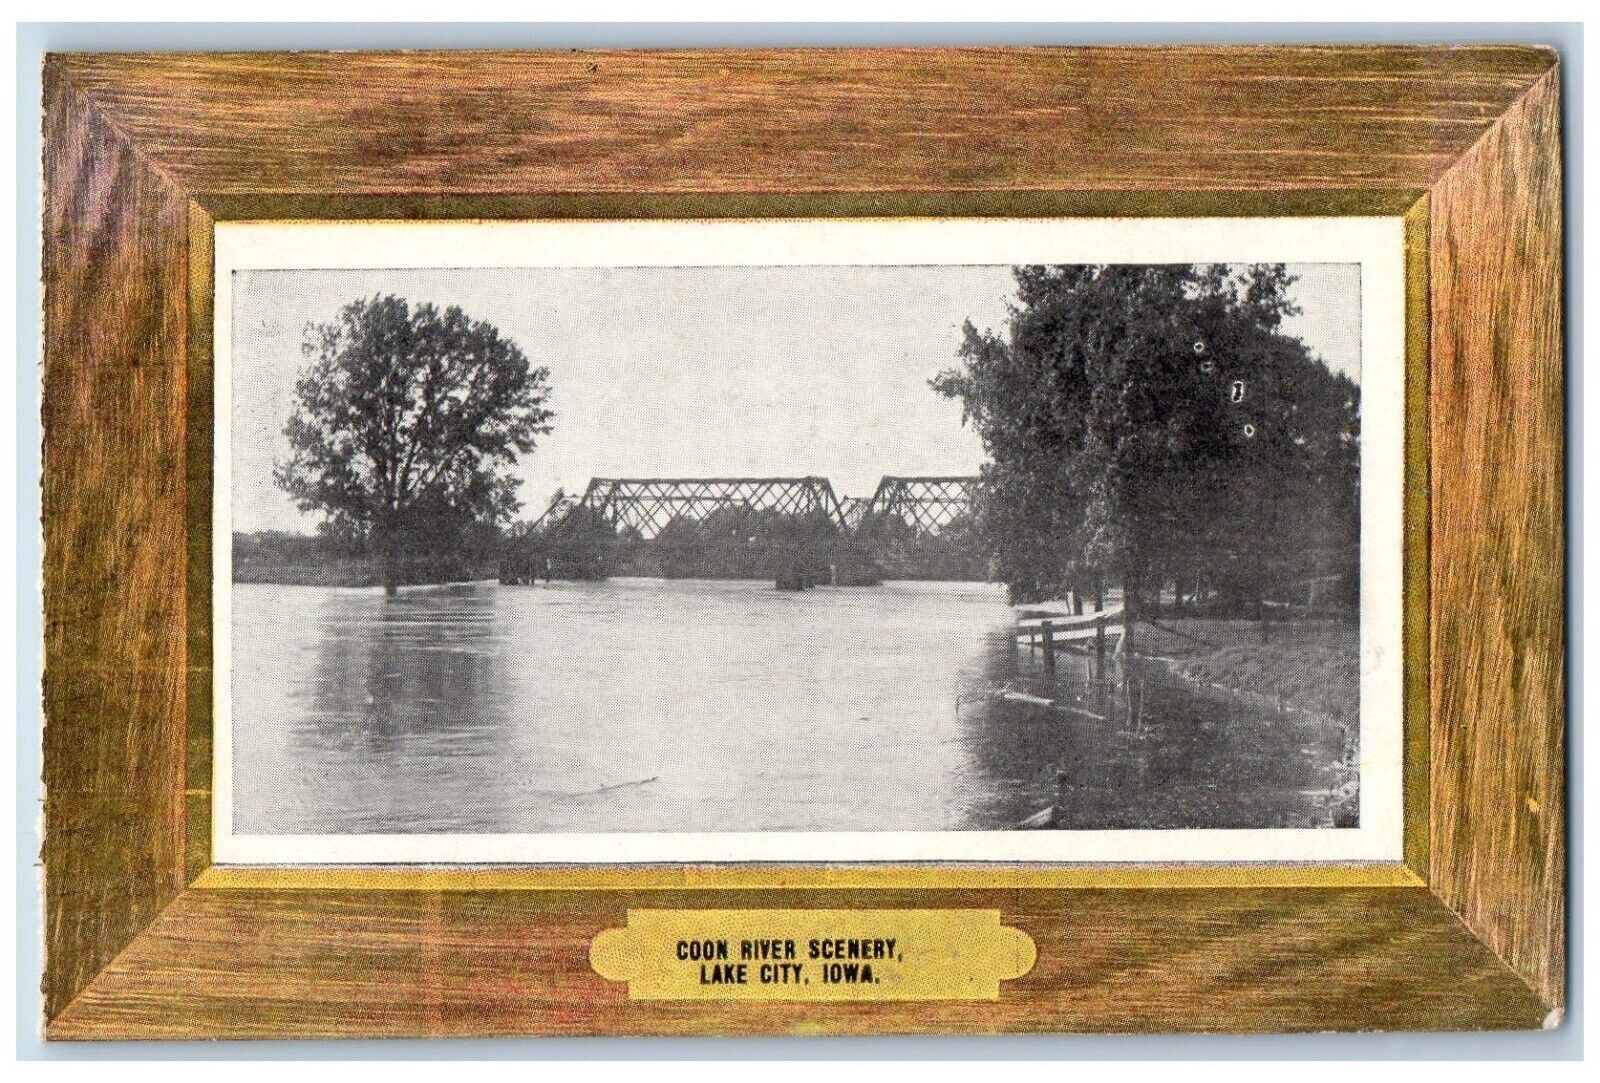 Lake City Iowa Postcard Coon River Scenery Exterior View c1910 Vintage Antique